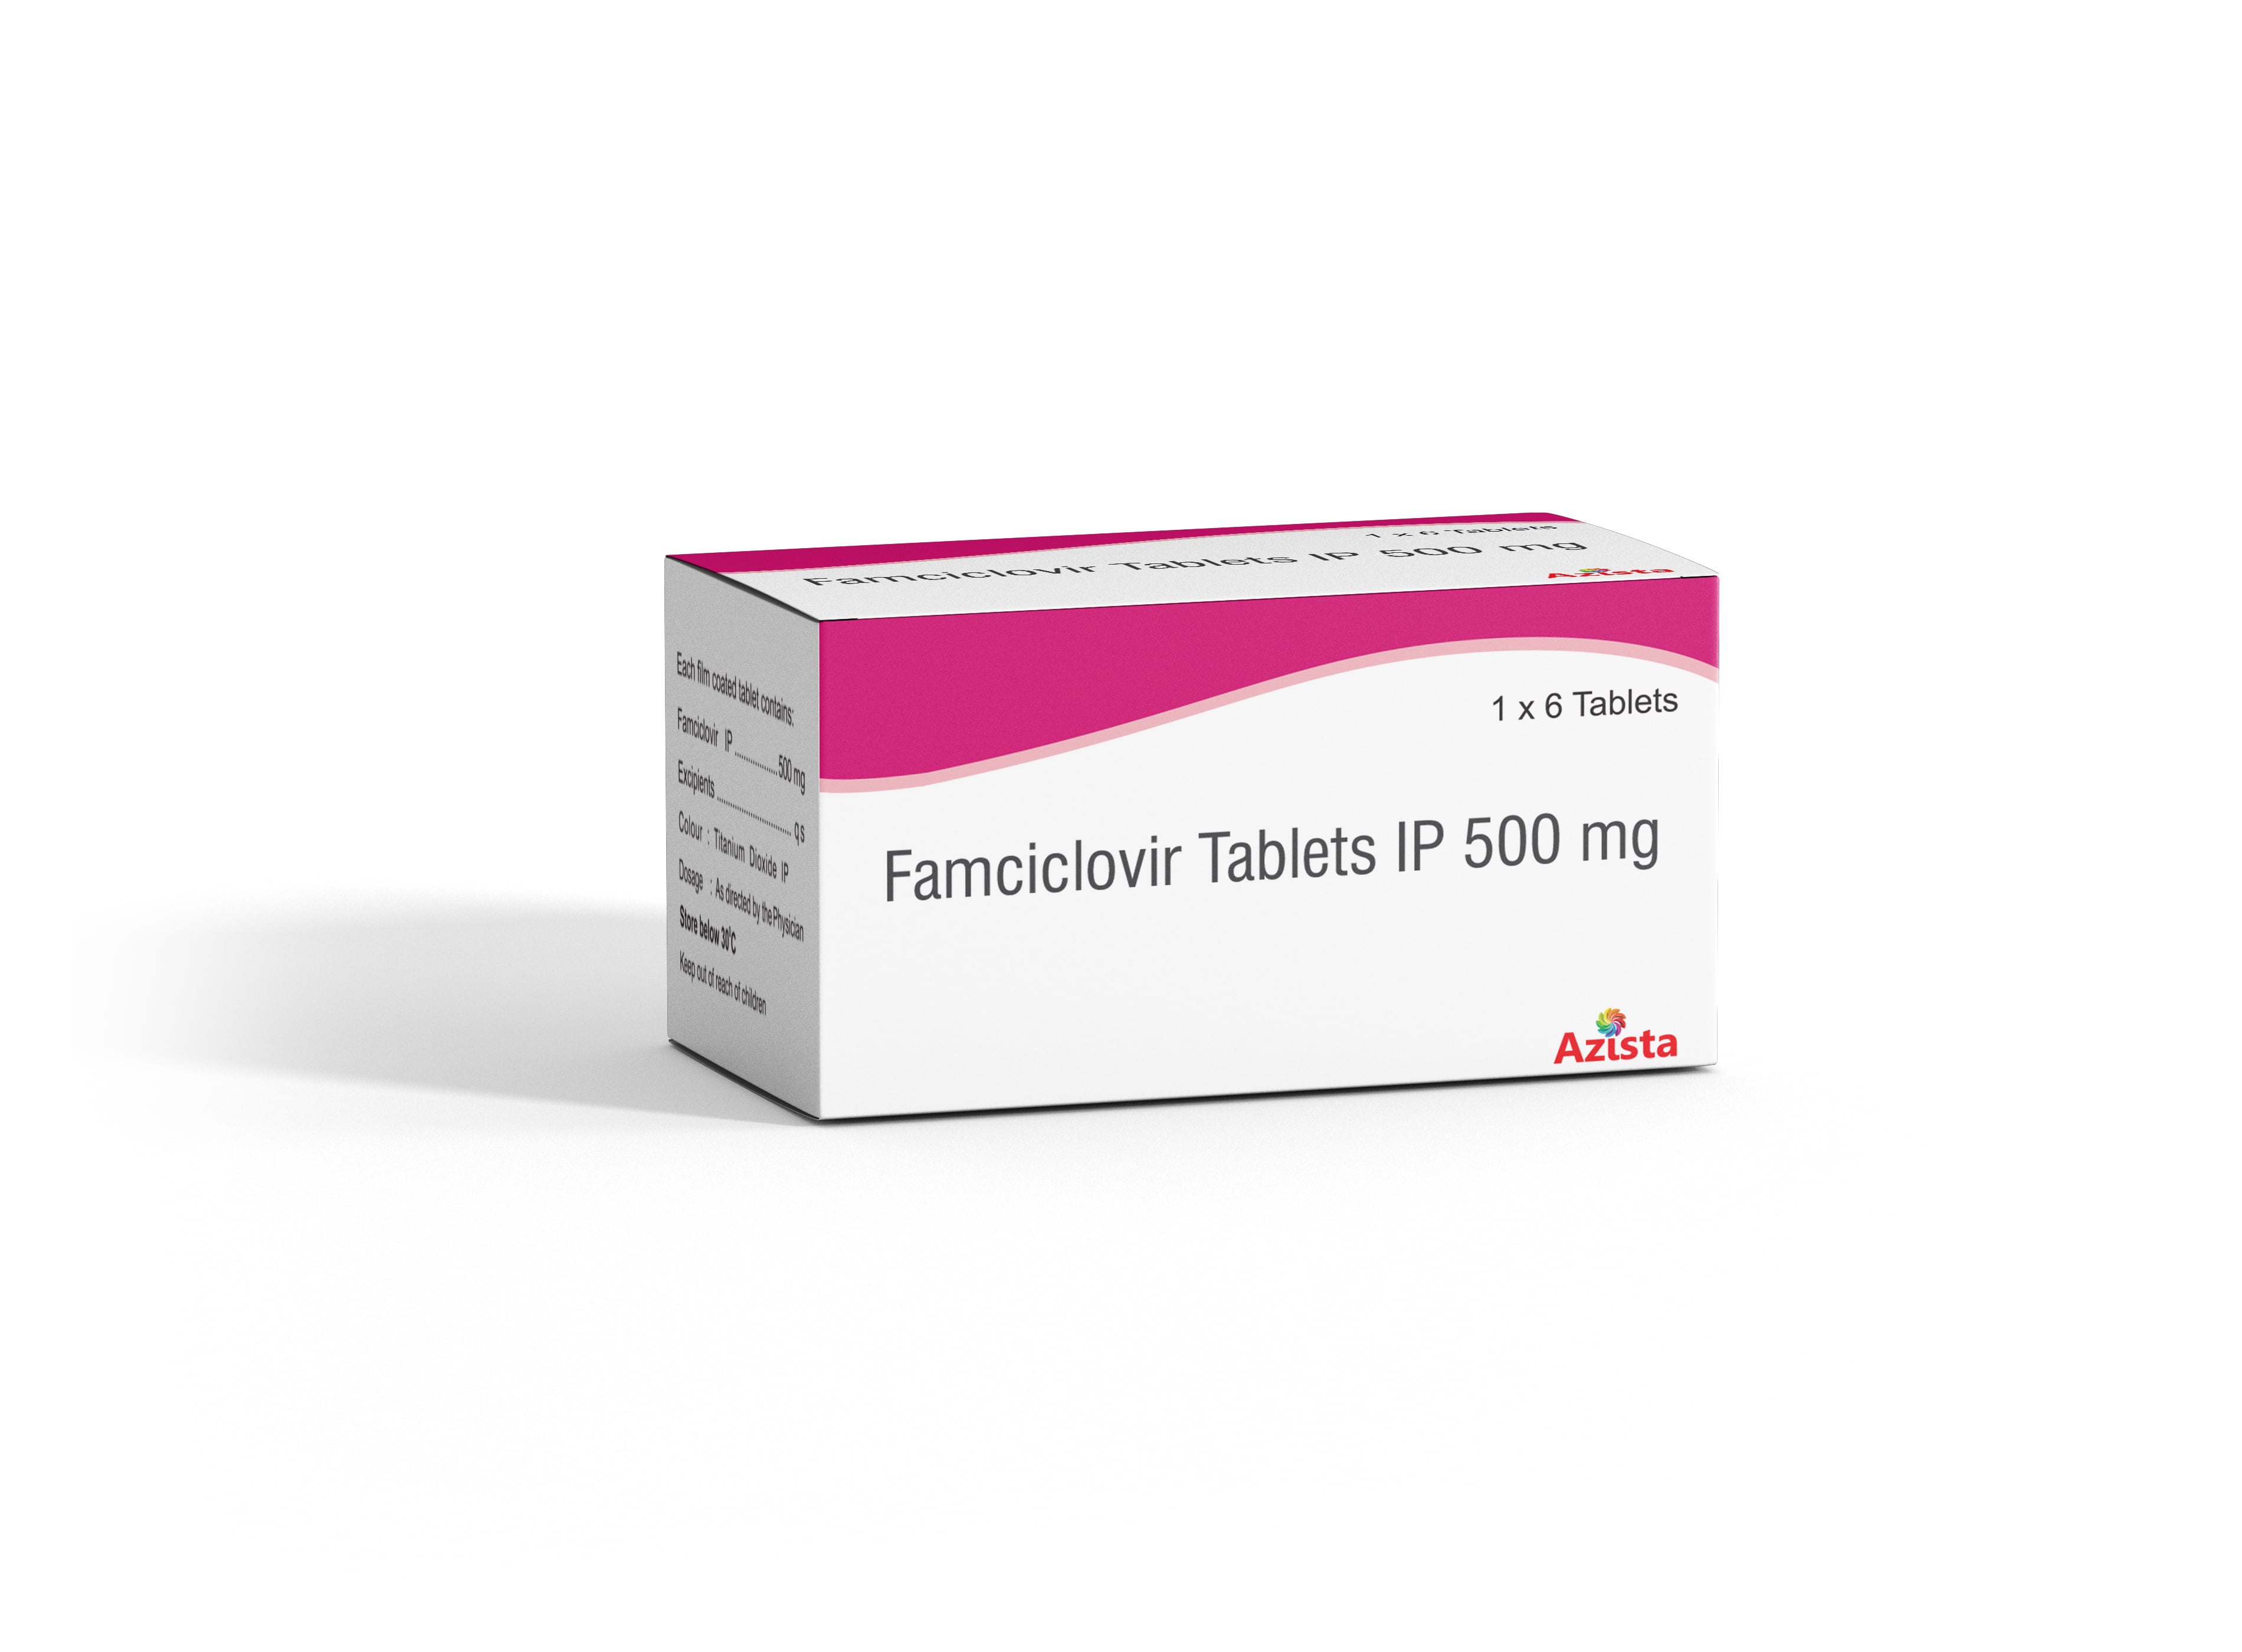 Famciclovir Tablet IP 500 mg